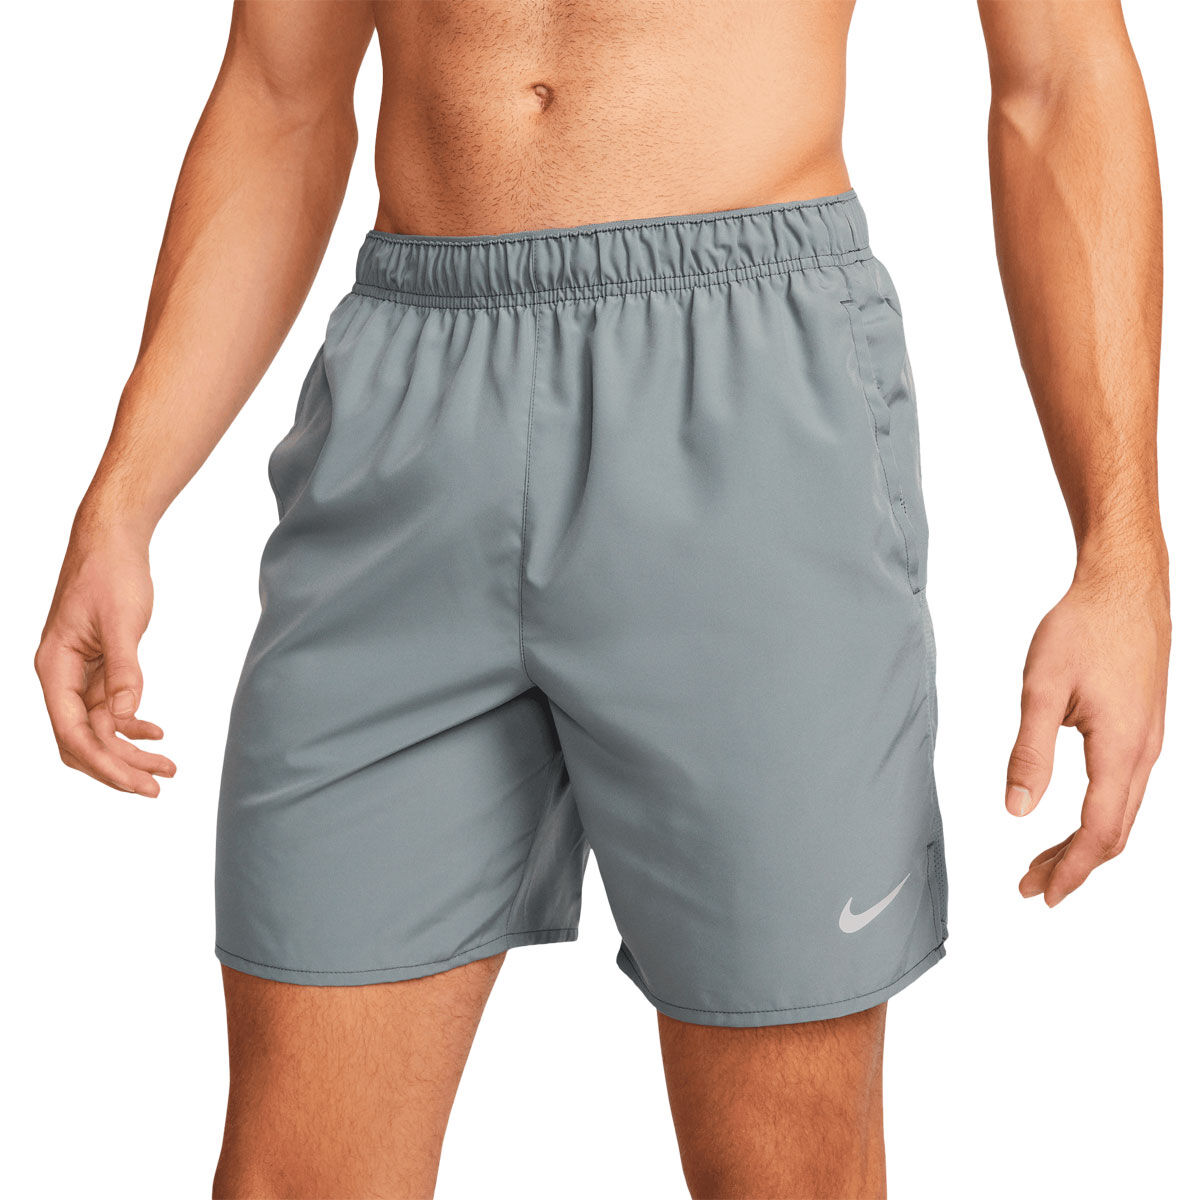 nike men's shorts 7 inch